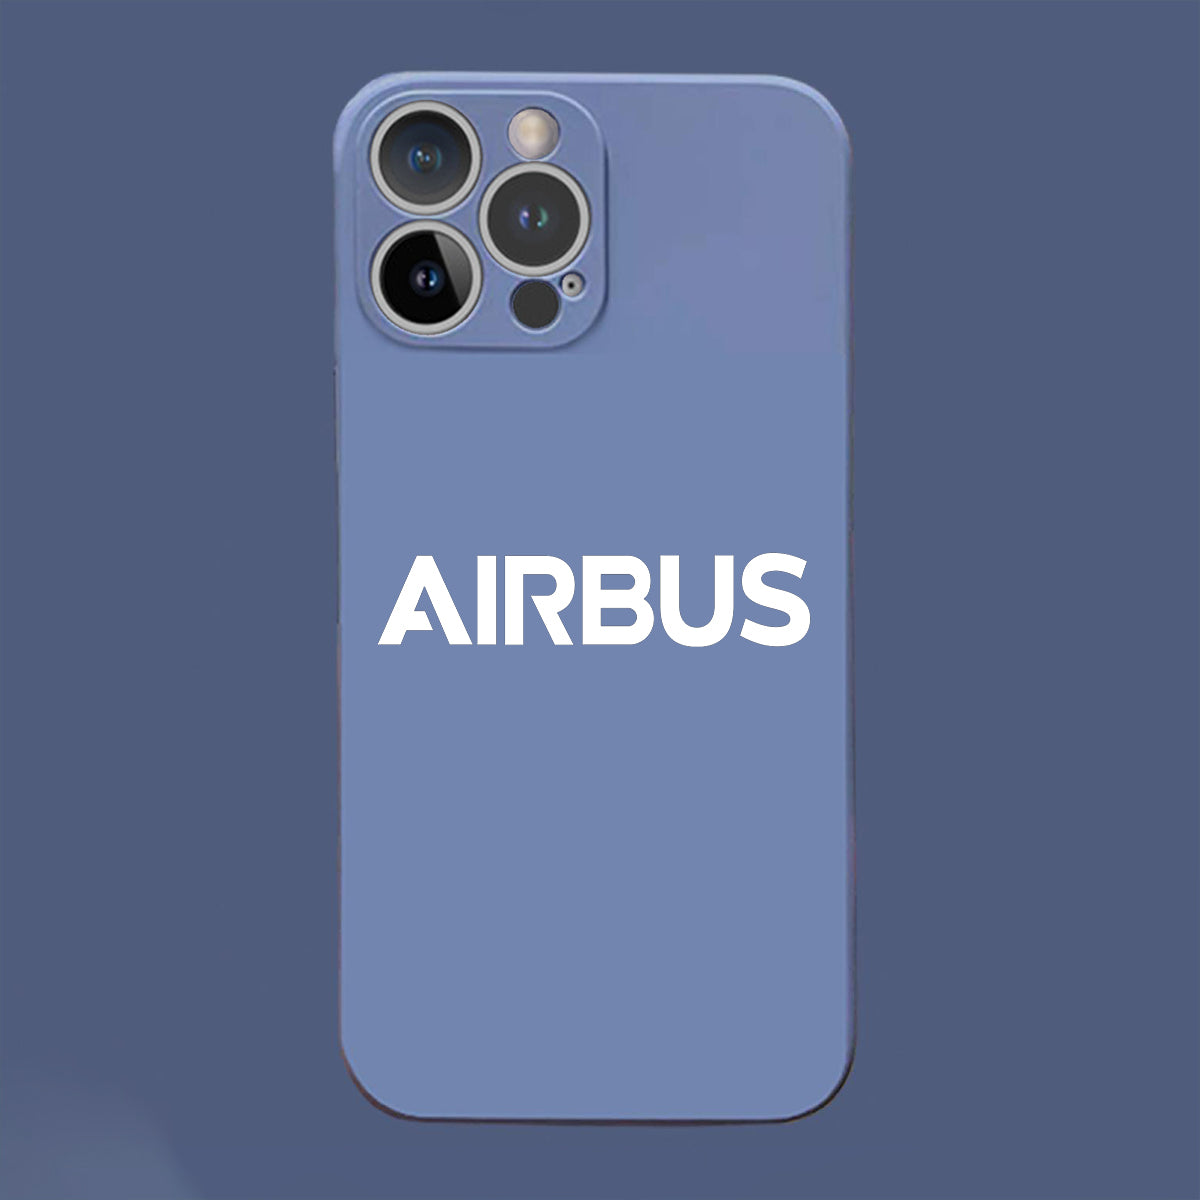 Airbus & Text Designed Soft Silicone iPhone Cases